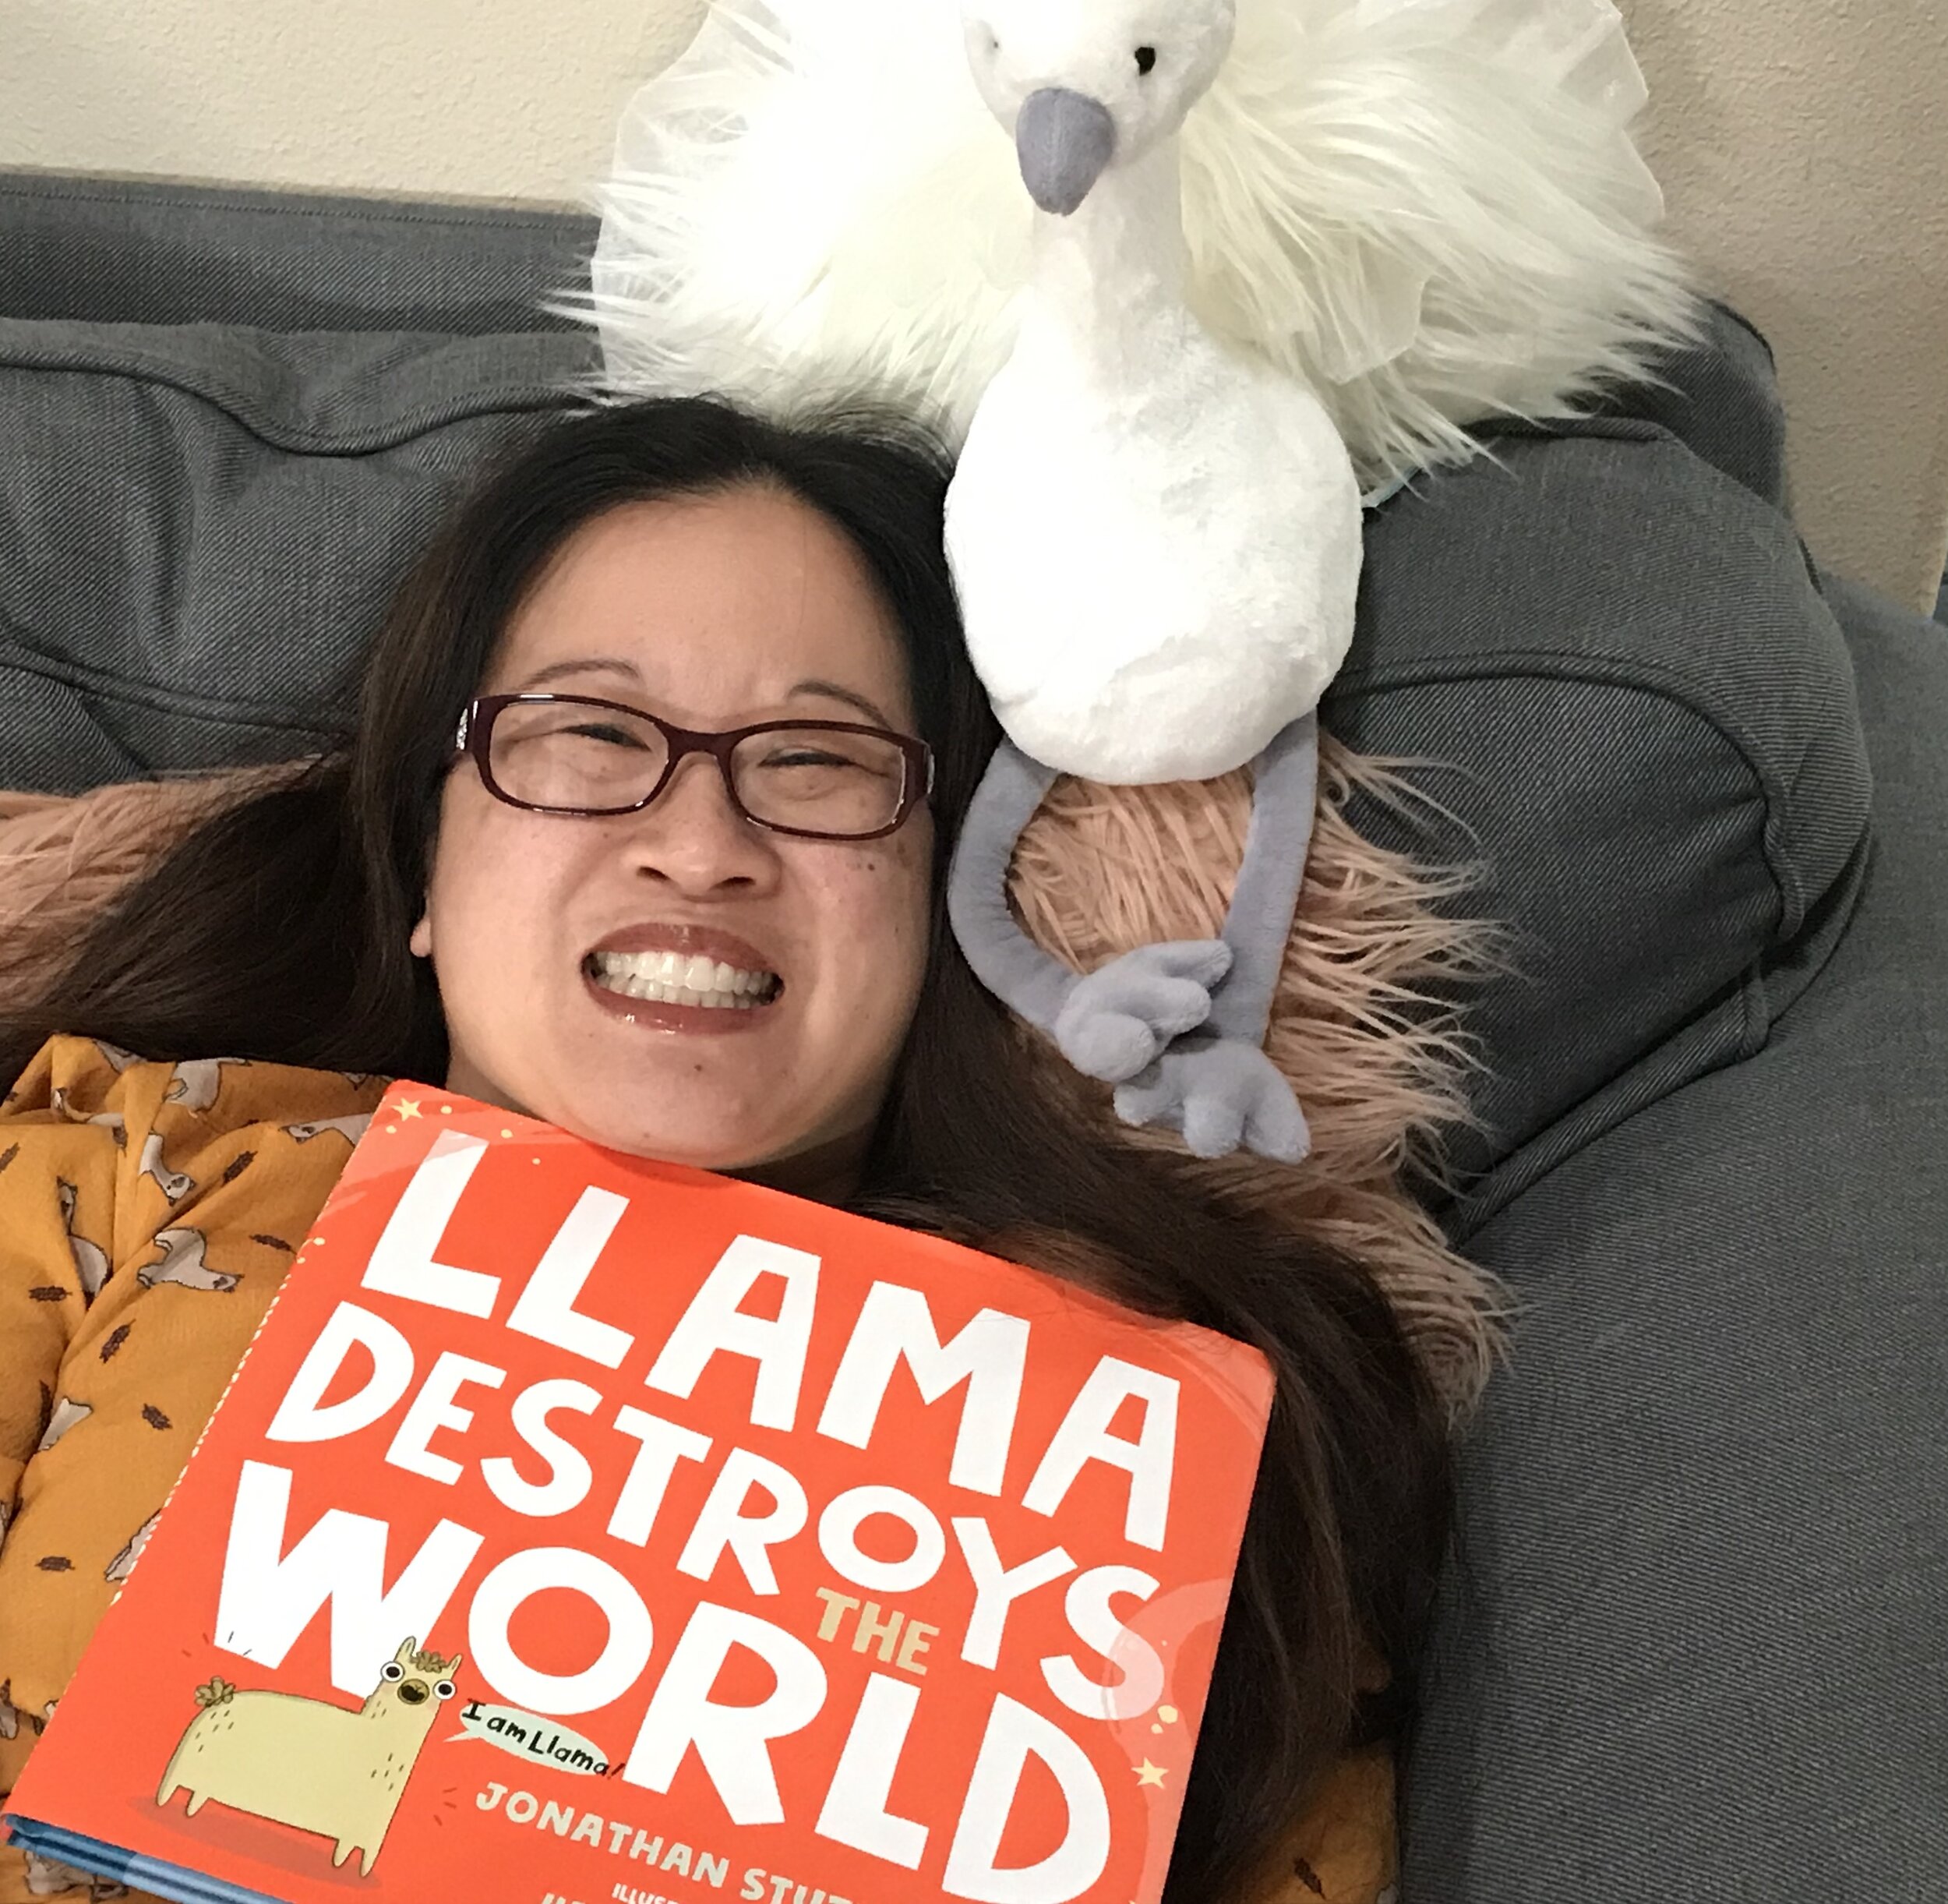 Doctor Bookworm Llama Destroys the World3.jpg